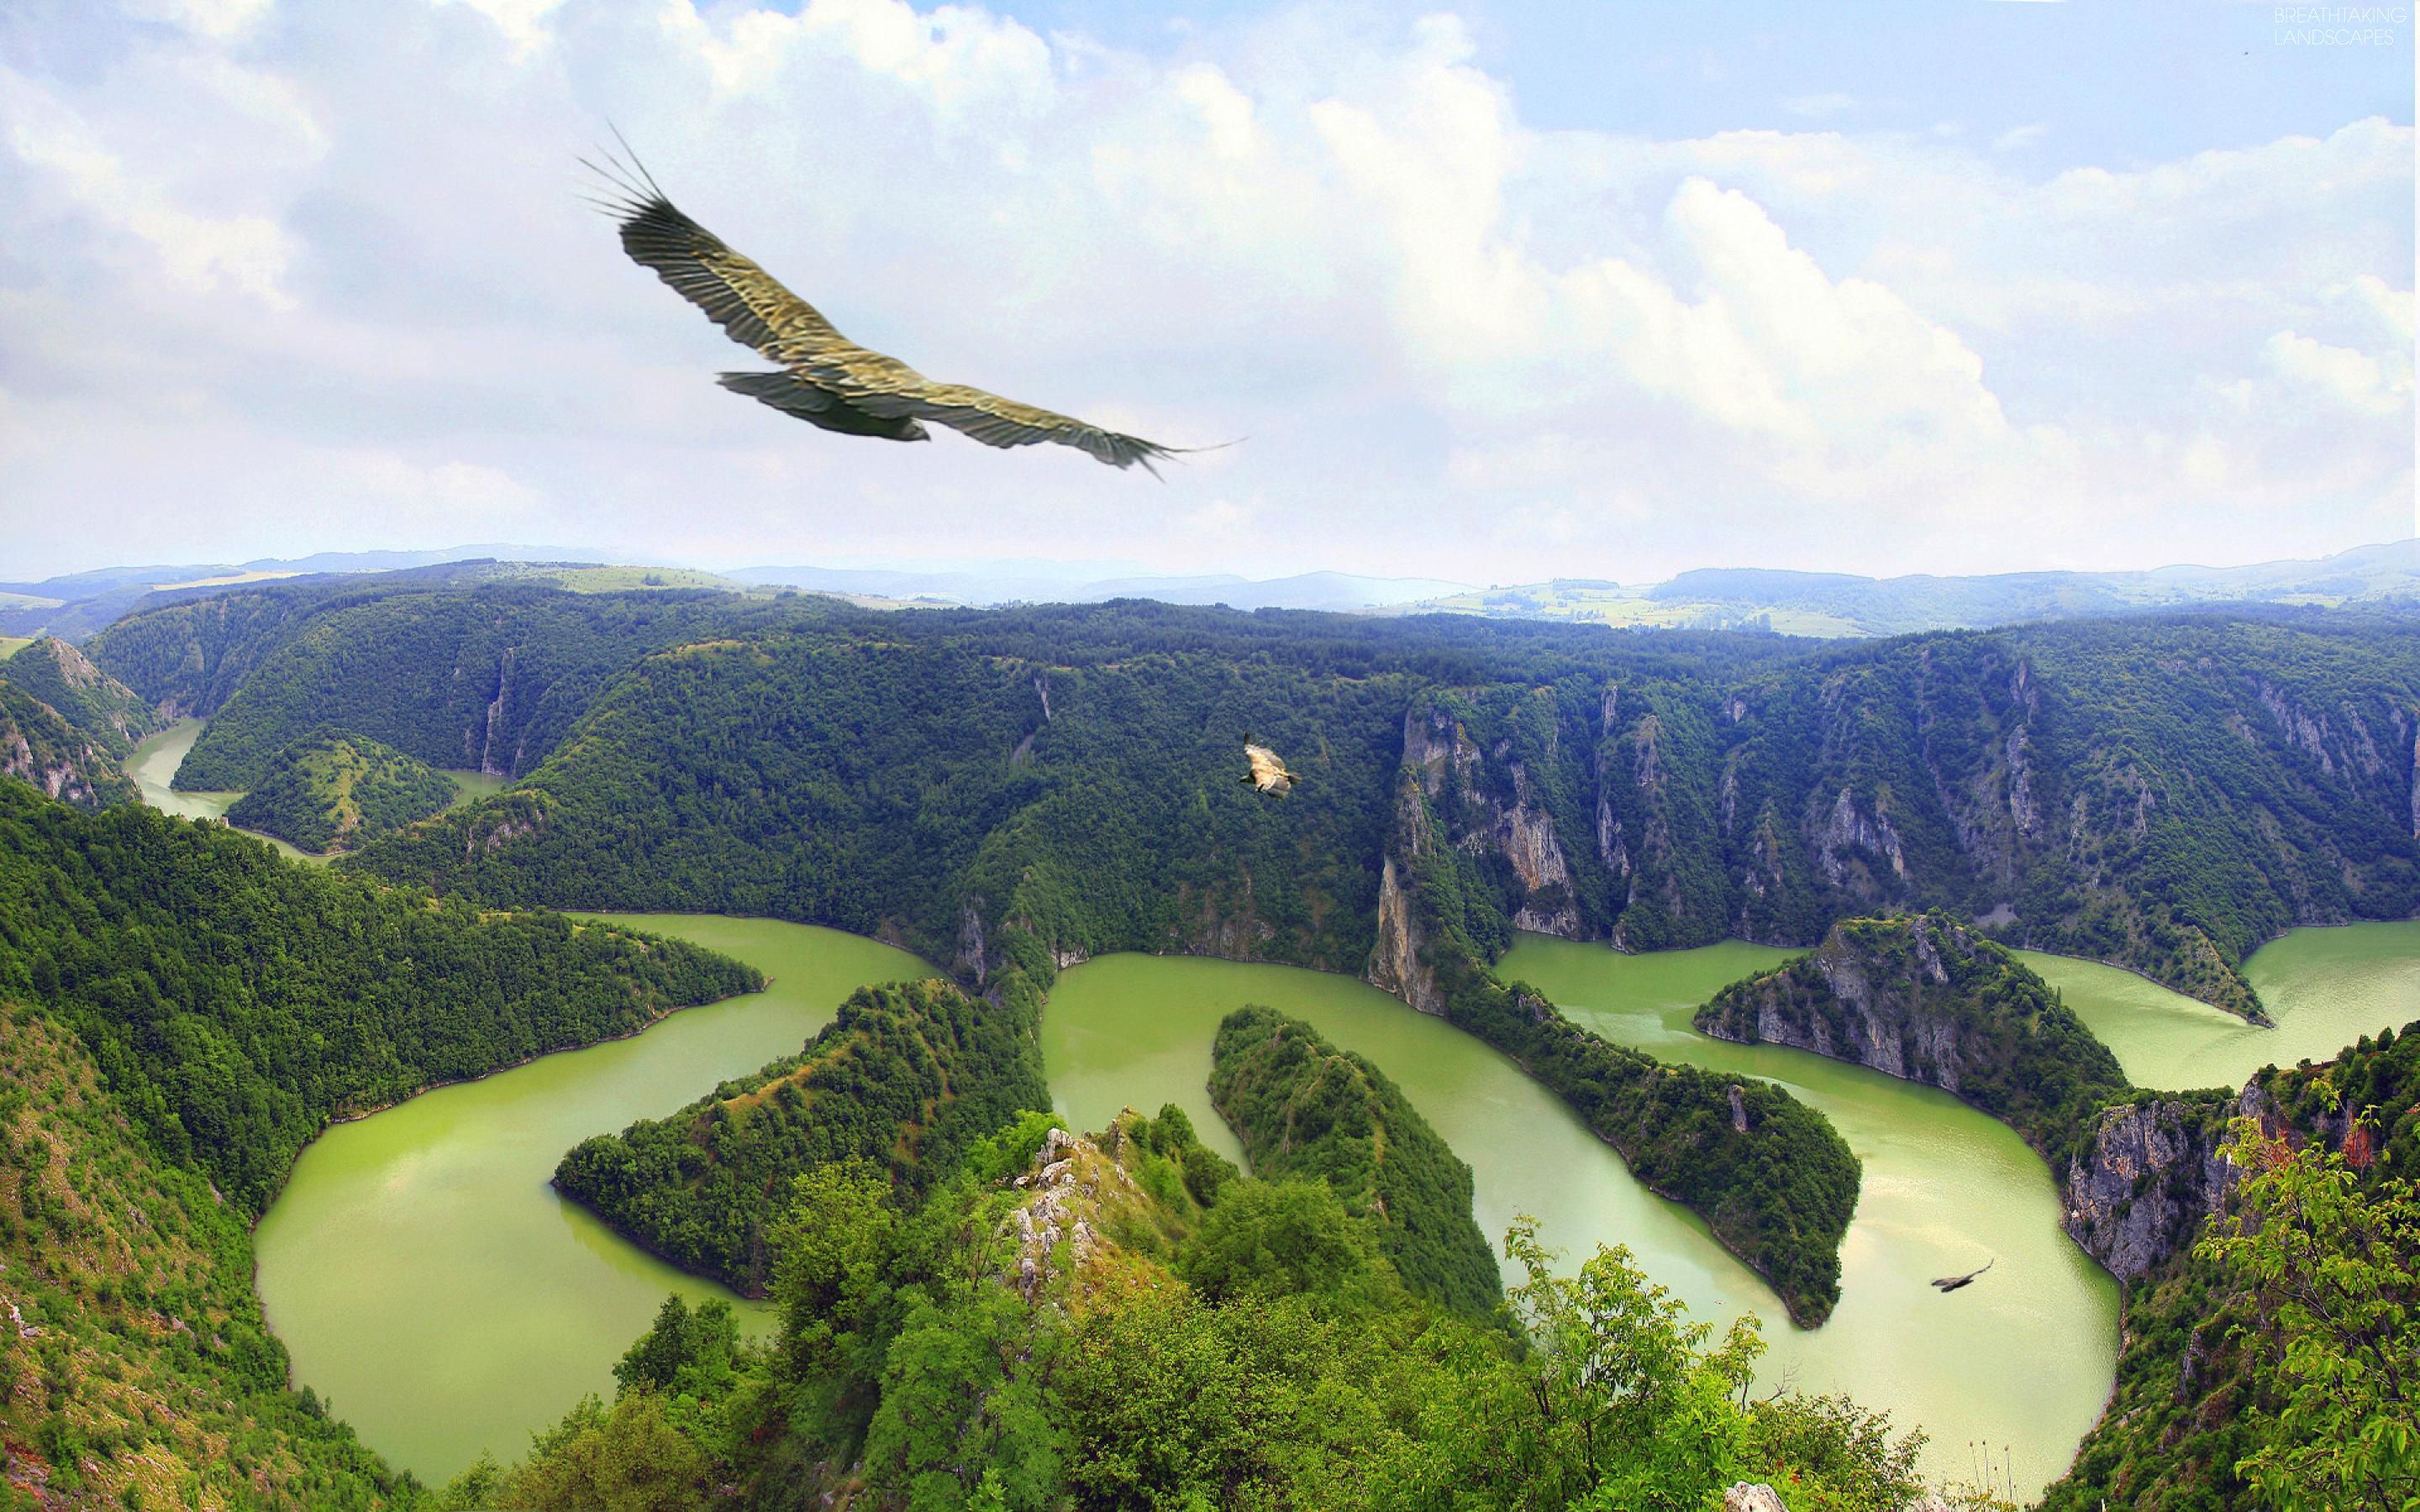 https://breathtakinglandscapes.files.wordpress.com/2013/02/breathtaking-landscapes-07-mountains-forest-river-stream-bends-bird-landscapes-river-uvac-serbia-2.jpg